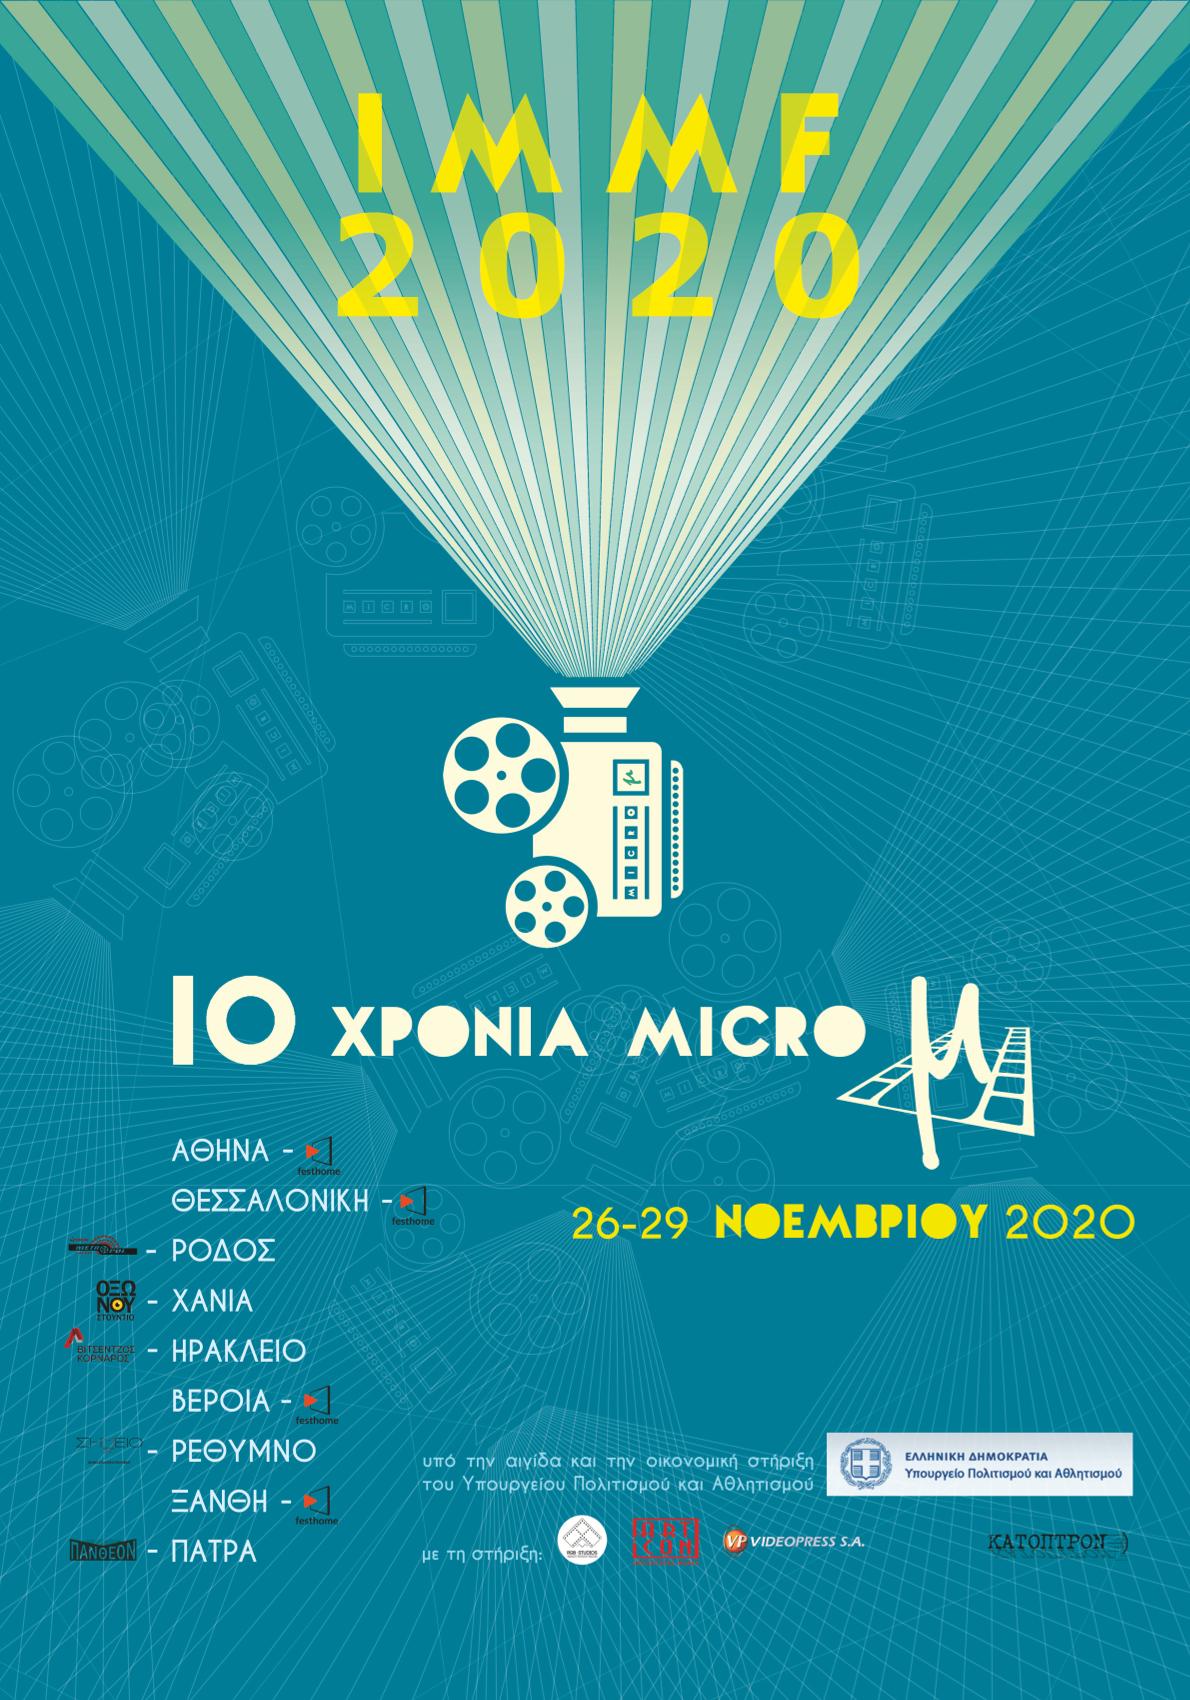 IMMF 2020 WEB